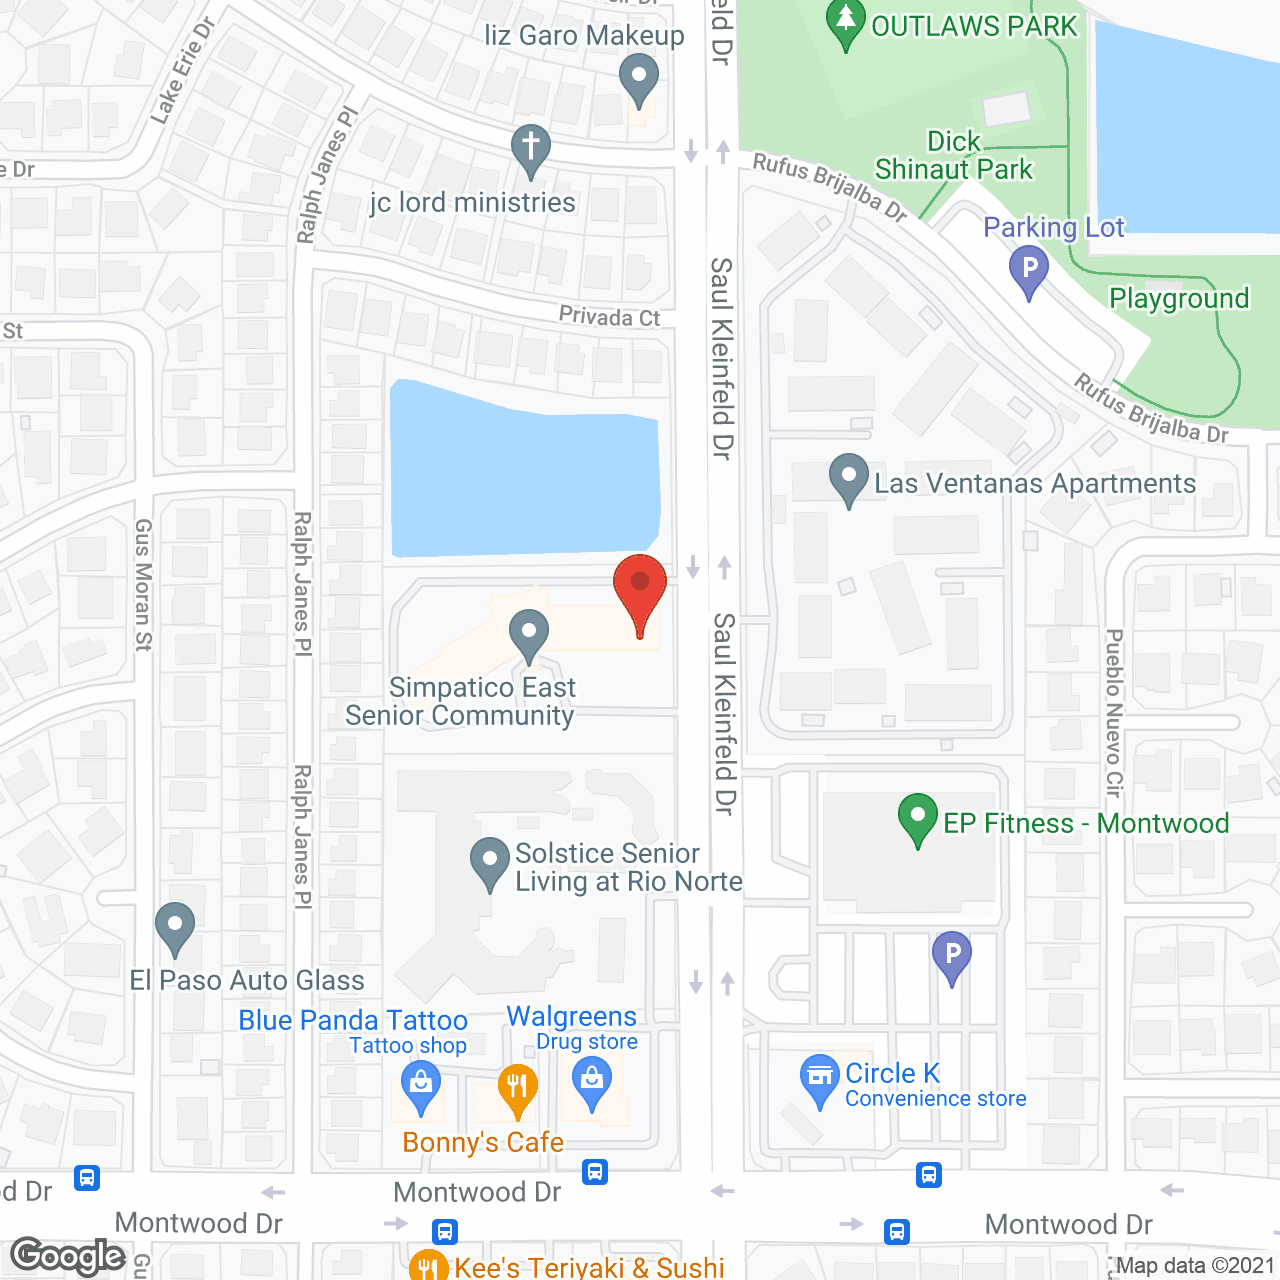 Simpatico East in google map